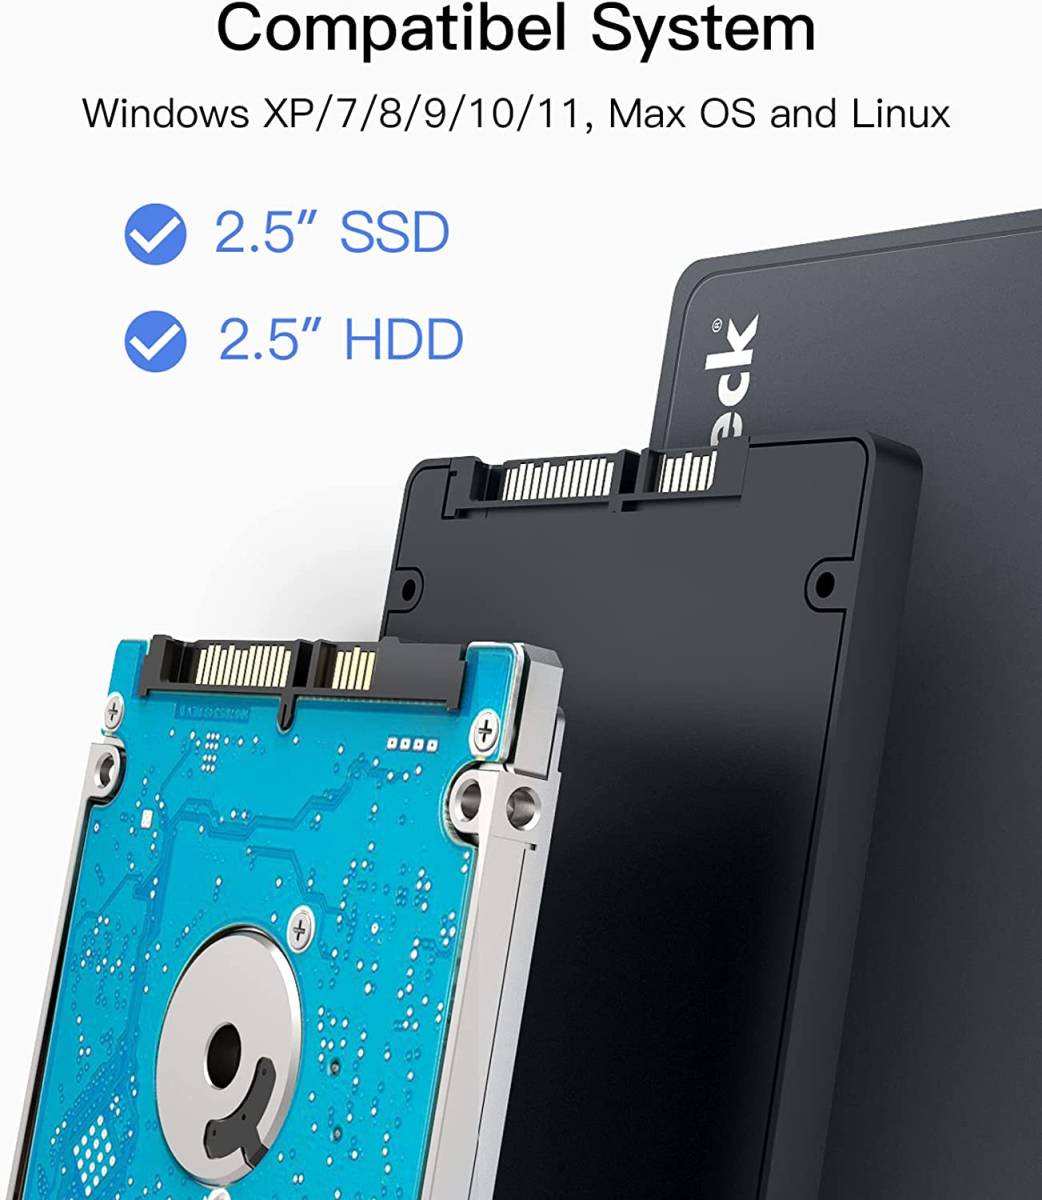 HDDケース 2.5型 USB 3.0 SATA HDD/SSDに対応、着脱は工具不要 HDD/SSDを外付HDDのように使用でき非常に便利